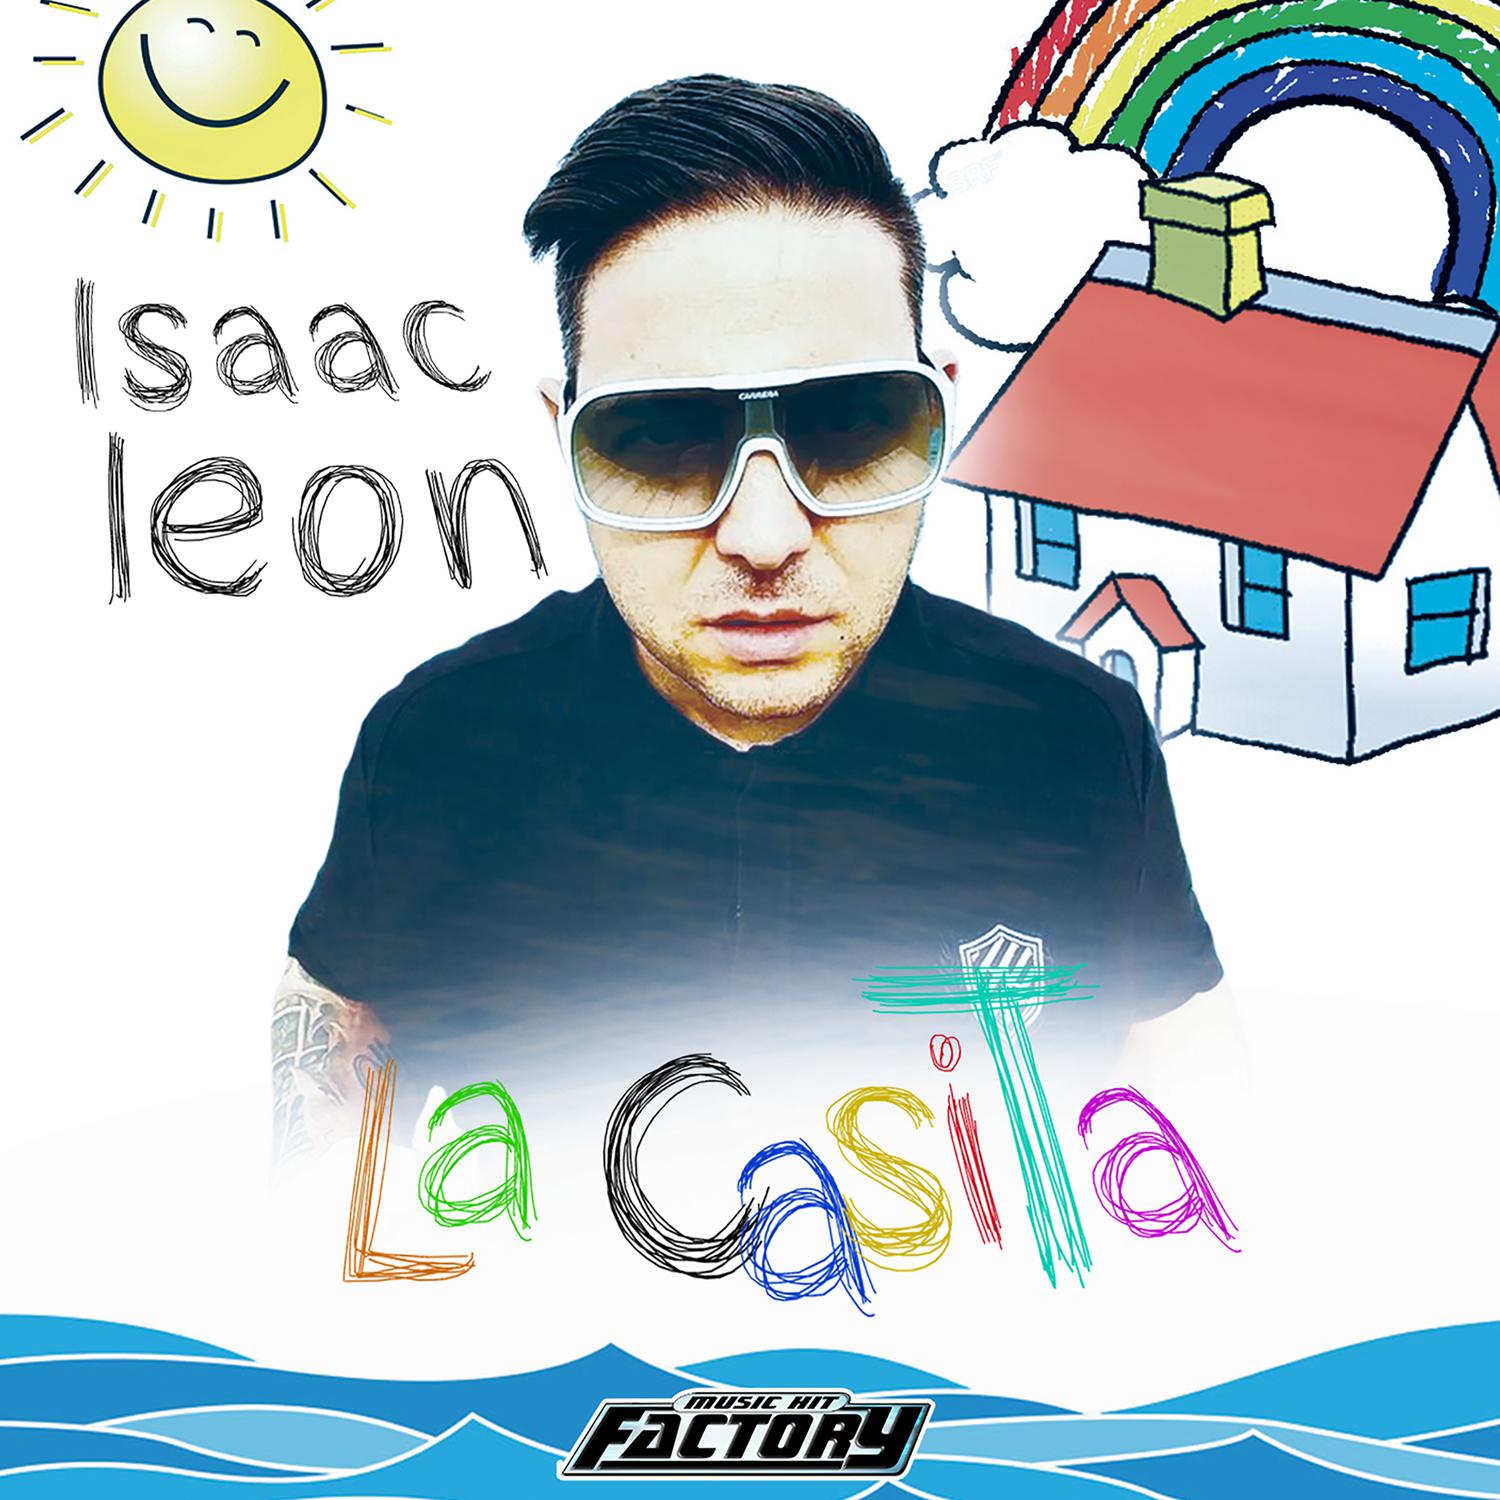 Isaac Leon - La Casita